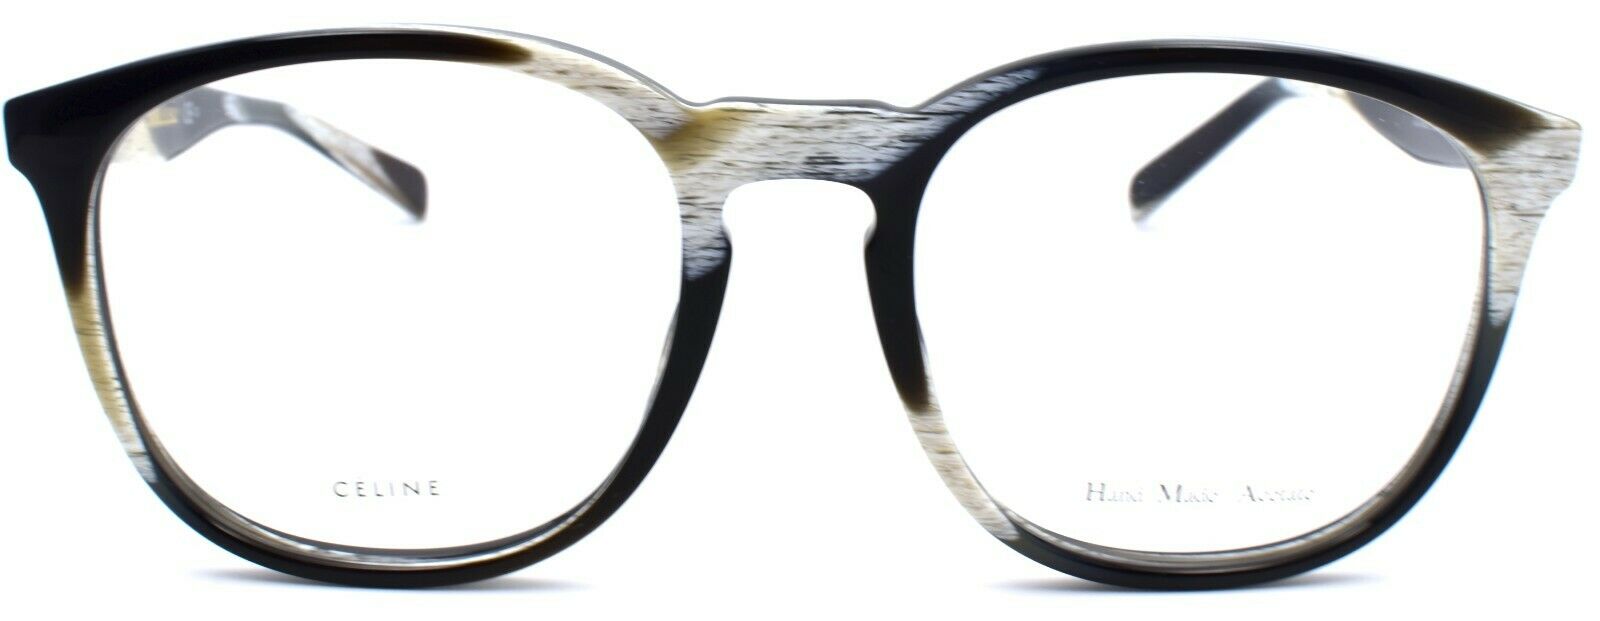 2-Celine CL 41353 5MY Thin Donnie Eyeglasses Frames 53-20-145 Dark Horn Italy-762753729675-IKSpecs